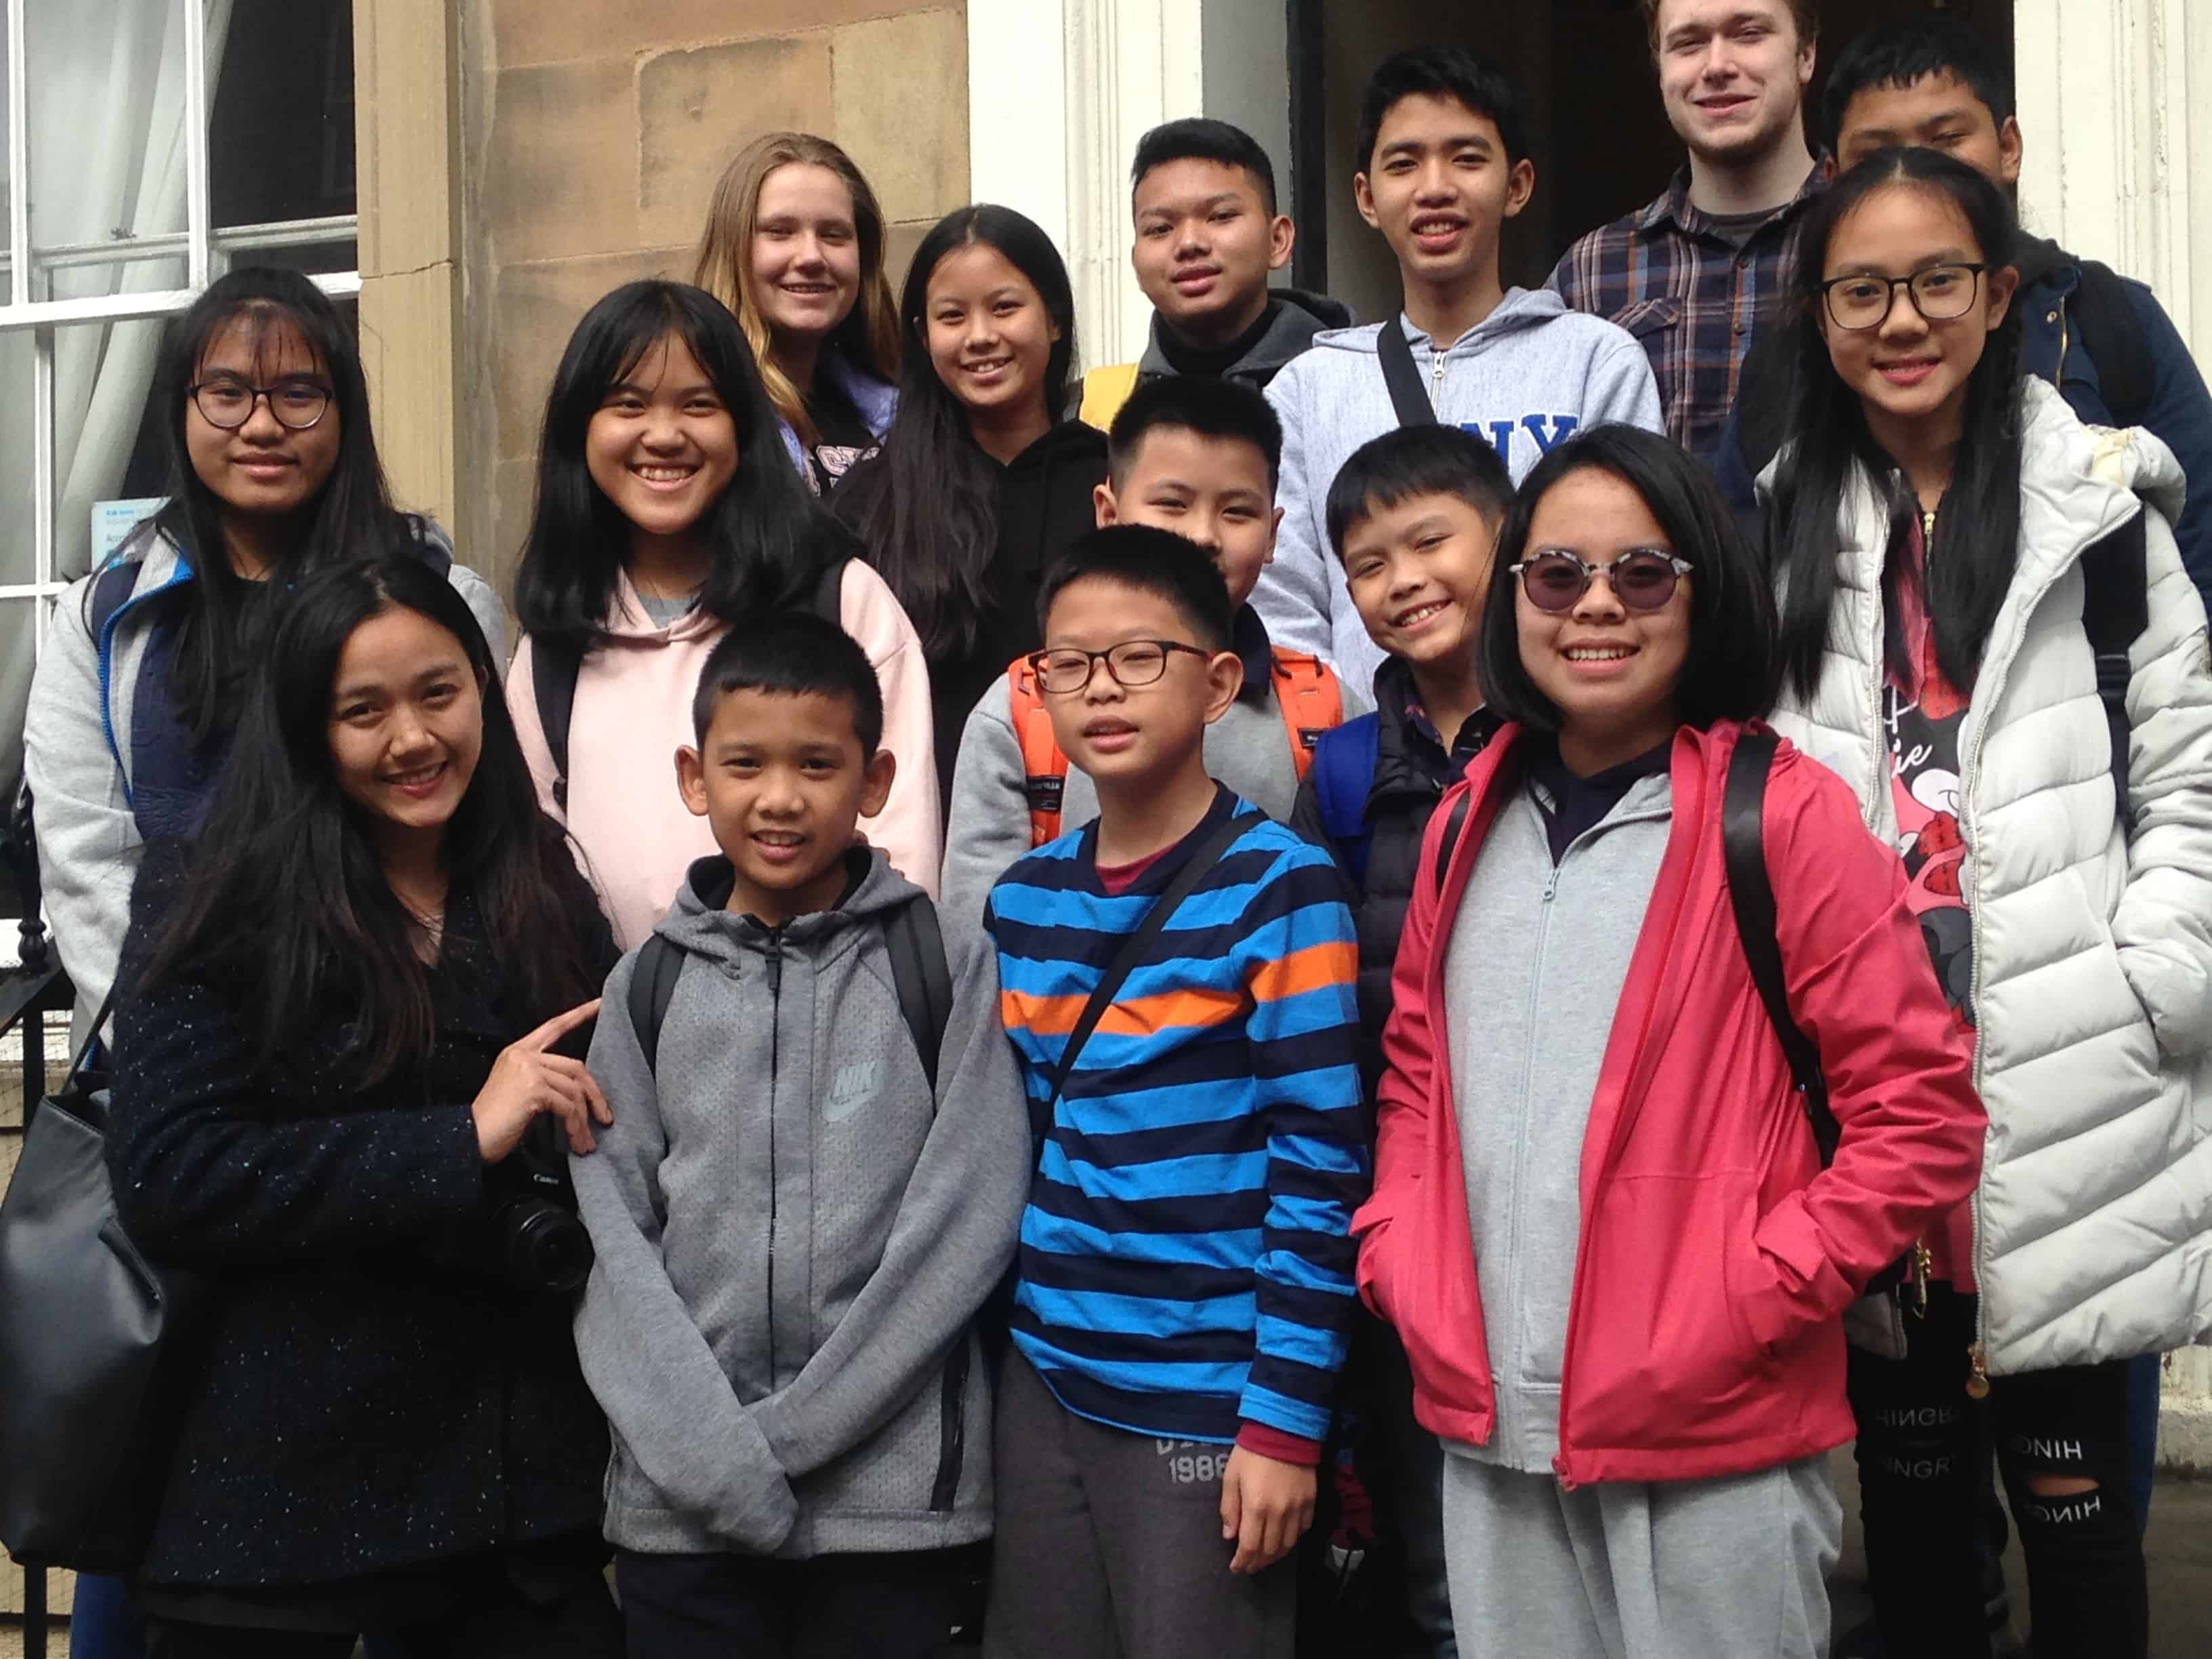 Shane English School Thailand visit Caledonian Language School in Edinburgh, Scotland